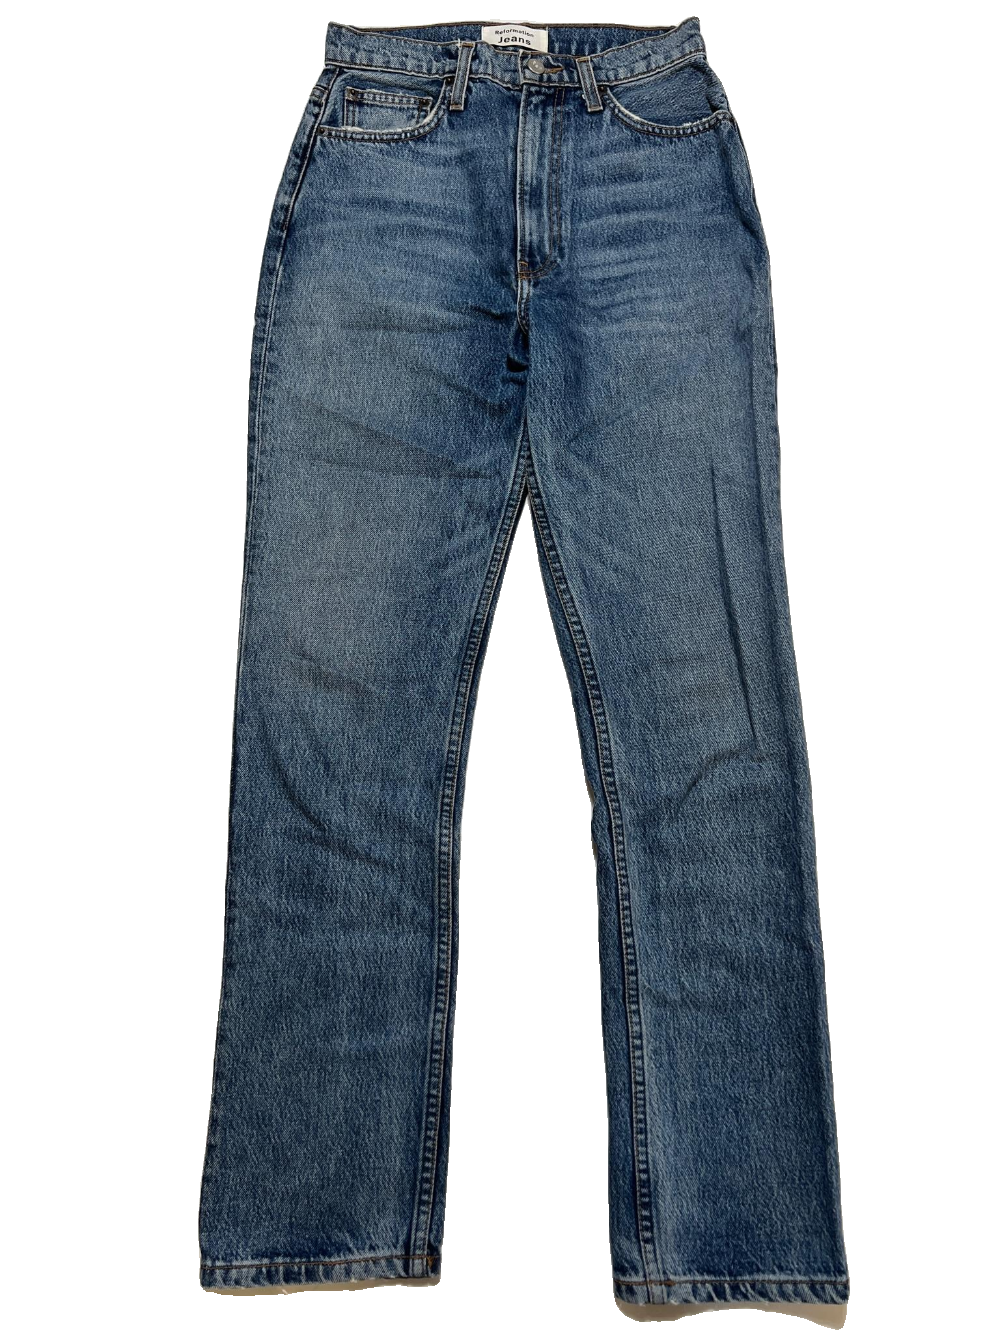 Reformation Jeans- Blue Jeans